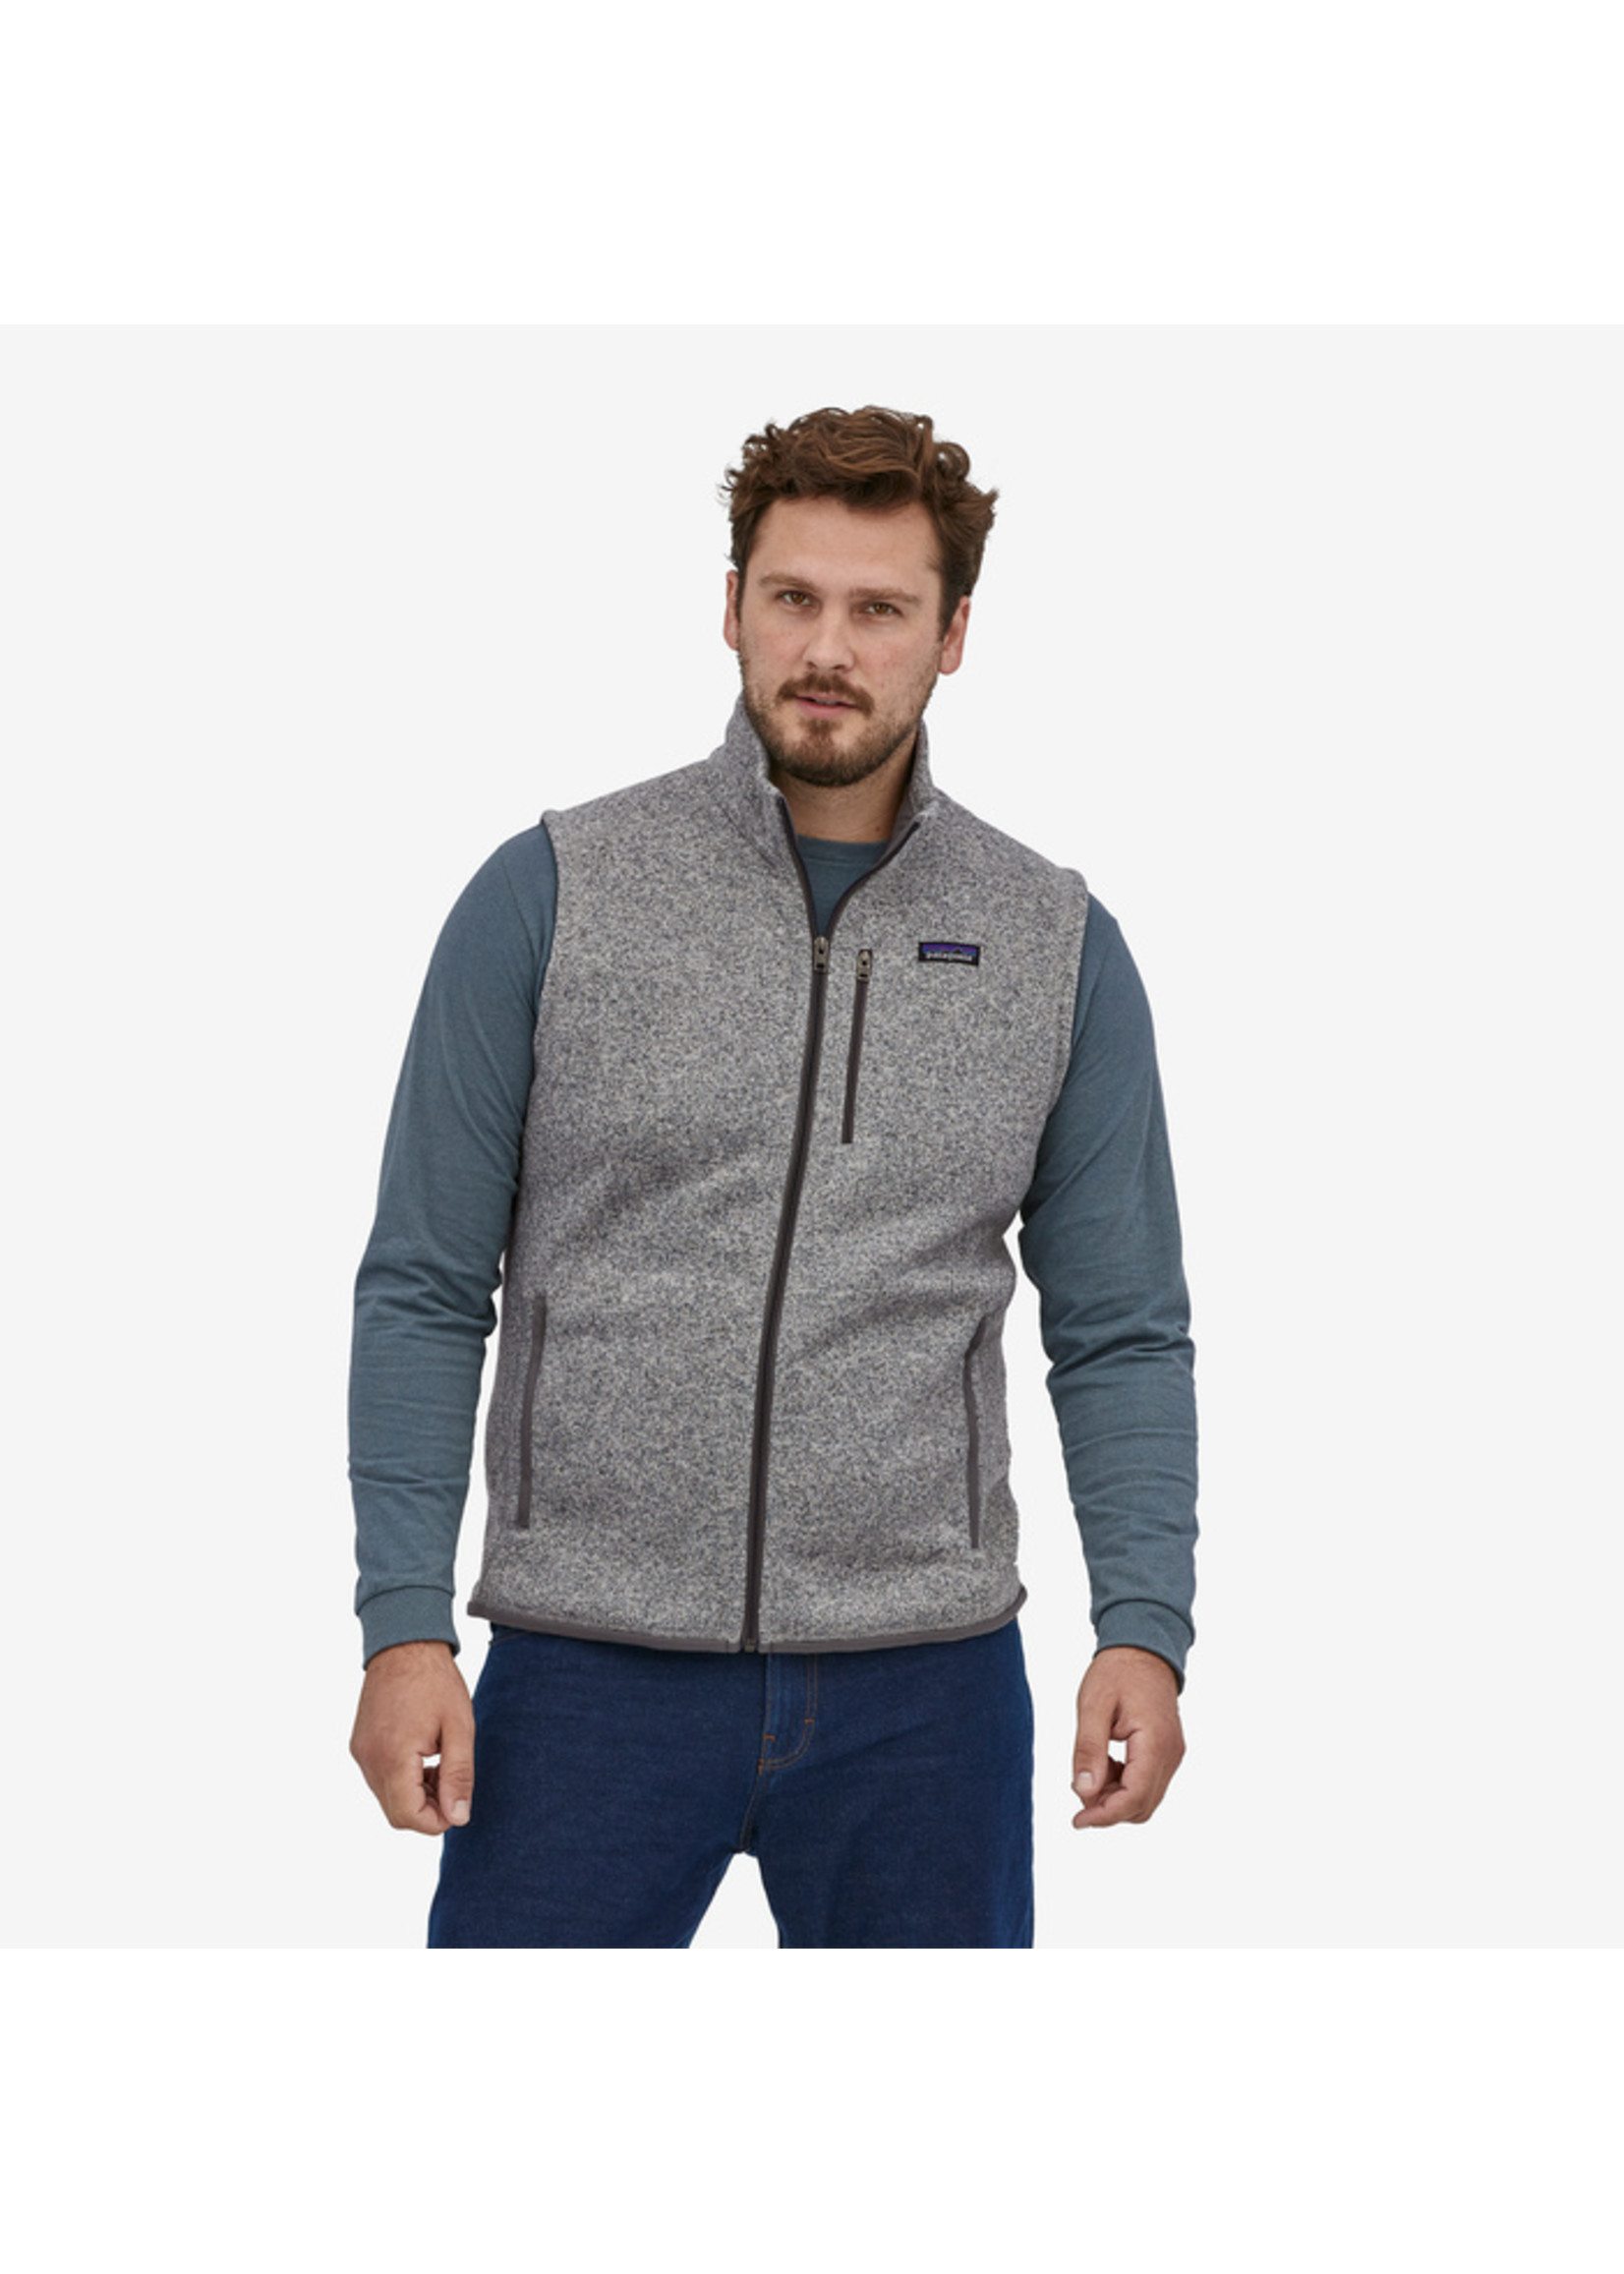 Patagonia Men's Better Sweater Vest